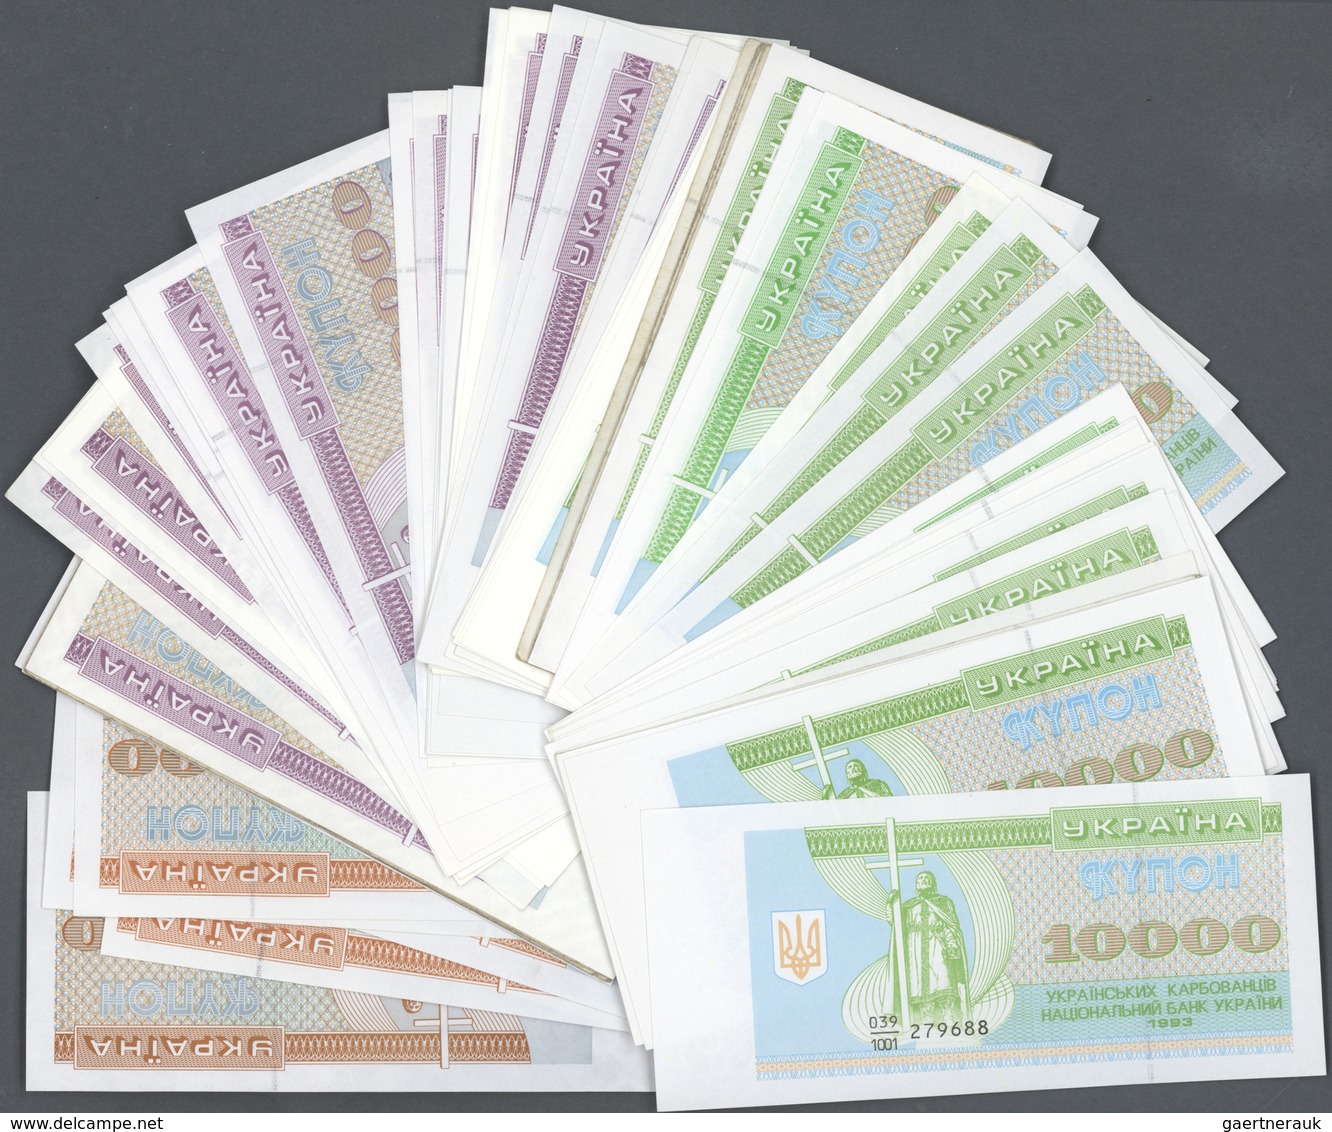 Ukraina / Ukraine: huge set with 337 Banknotes of the Ukrainian National Bank issues 1991 - 1995, co